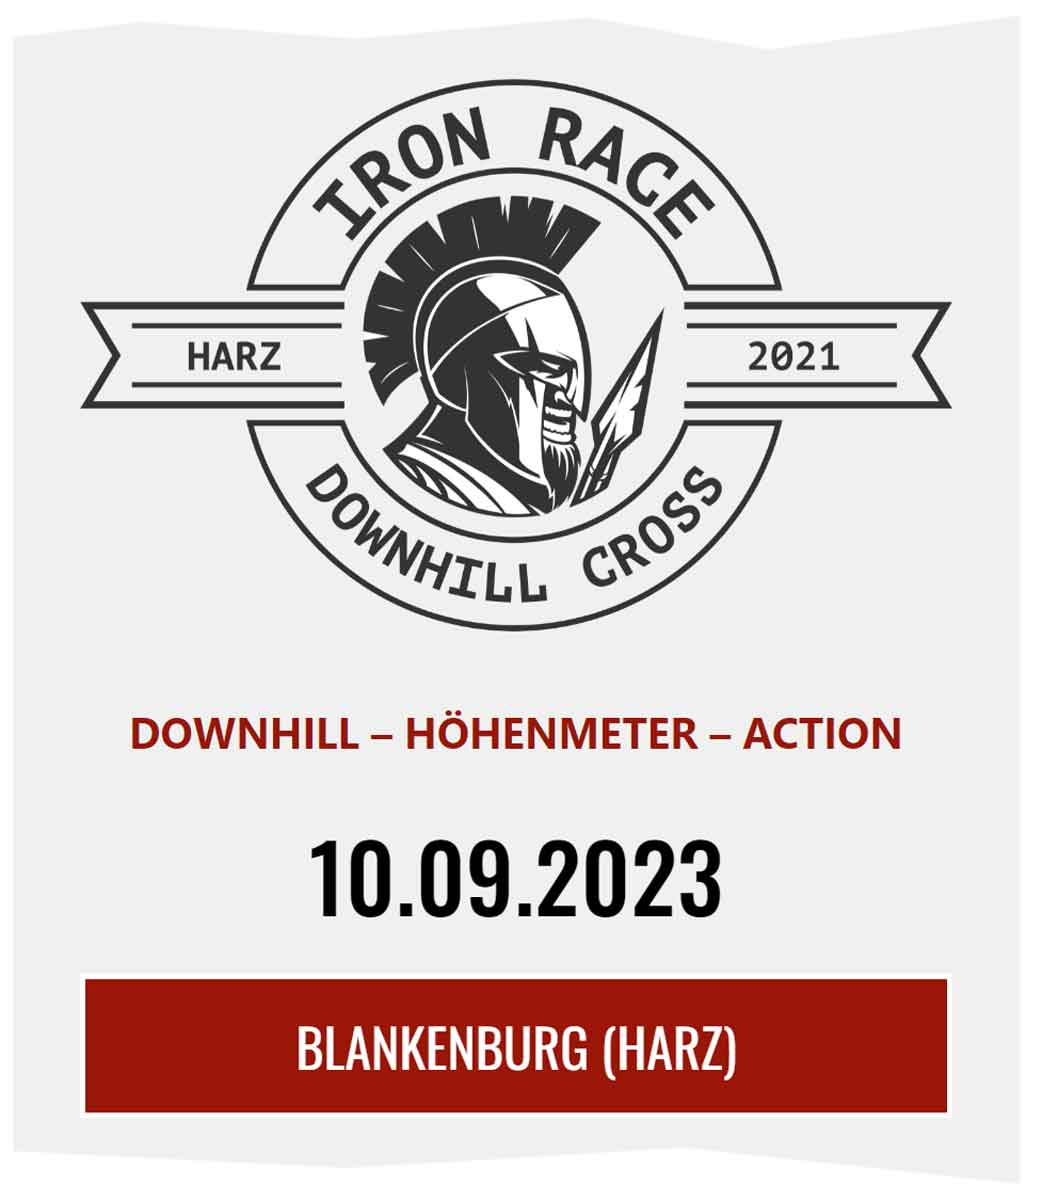 10.09.2023 - Iron Race - Downhill Cross - Harz (Blankenburg)